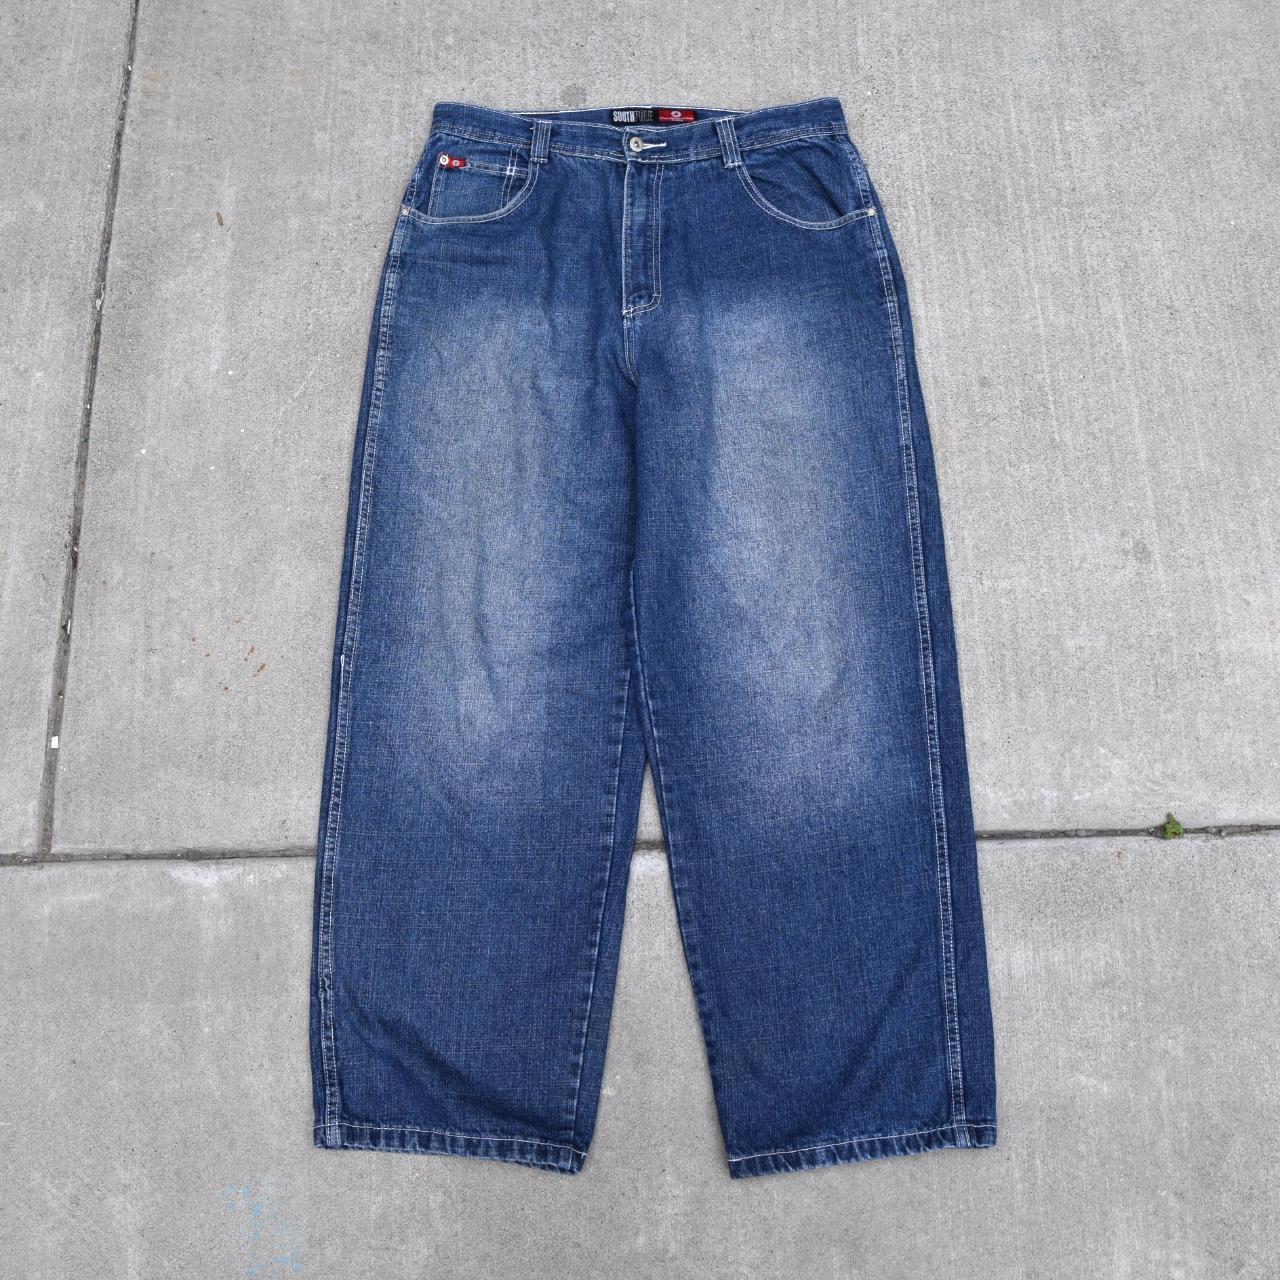 Vintage Southpole Jeans, 38 Waist Baggy Fit Grunge... - Depop